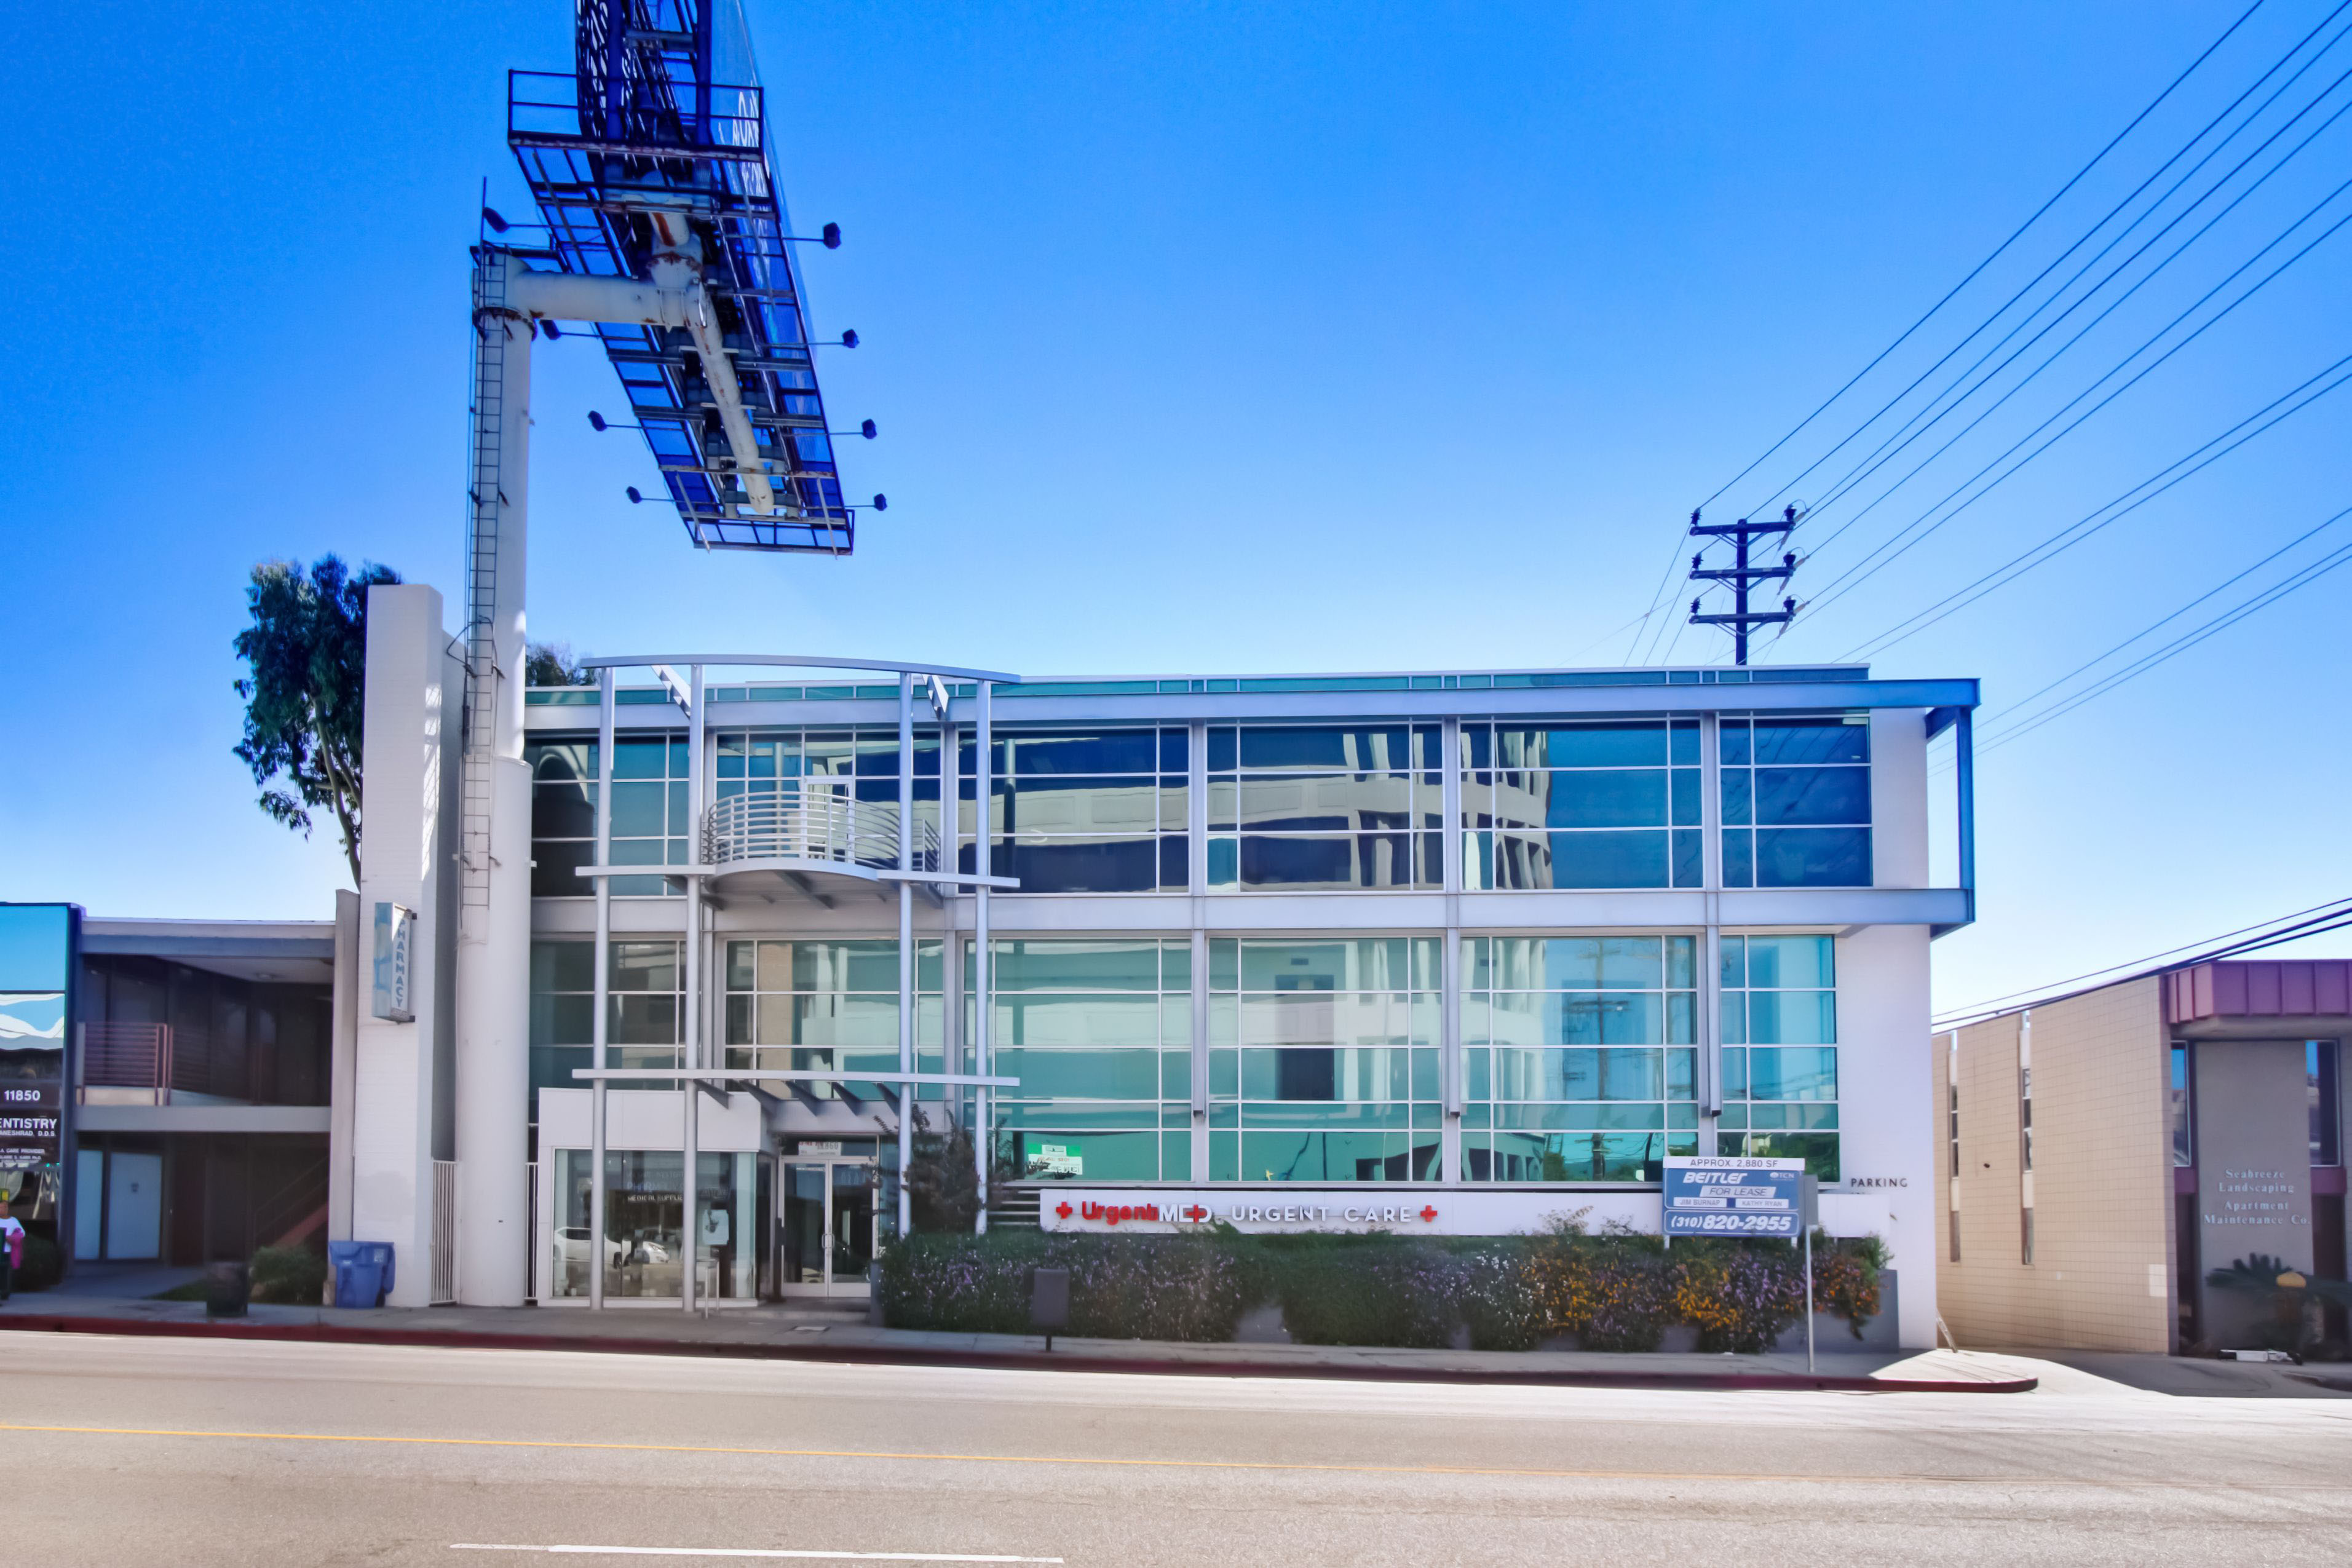 WESTMAC Commercial Brokerage Company arranges $11.5 Million Sale in Los Angeles’s Brentwood Neighborhood 